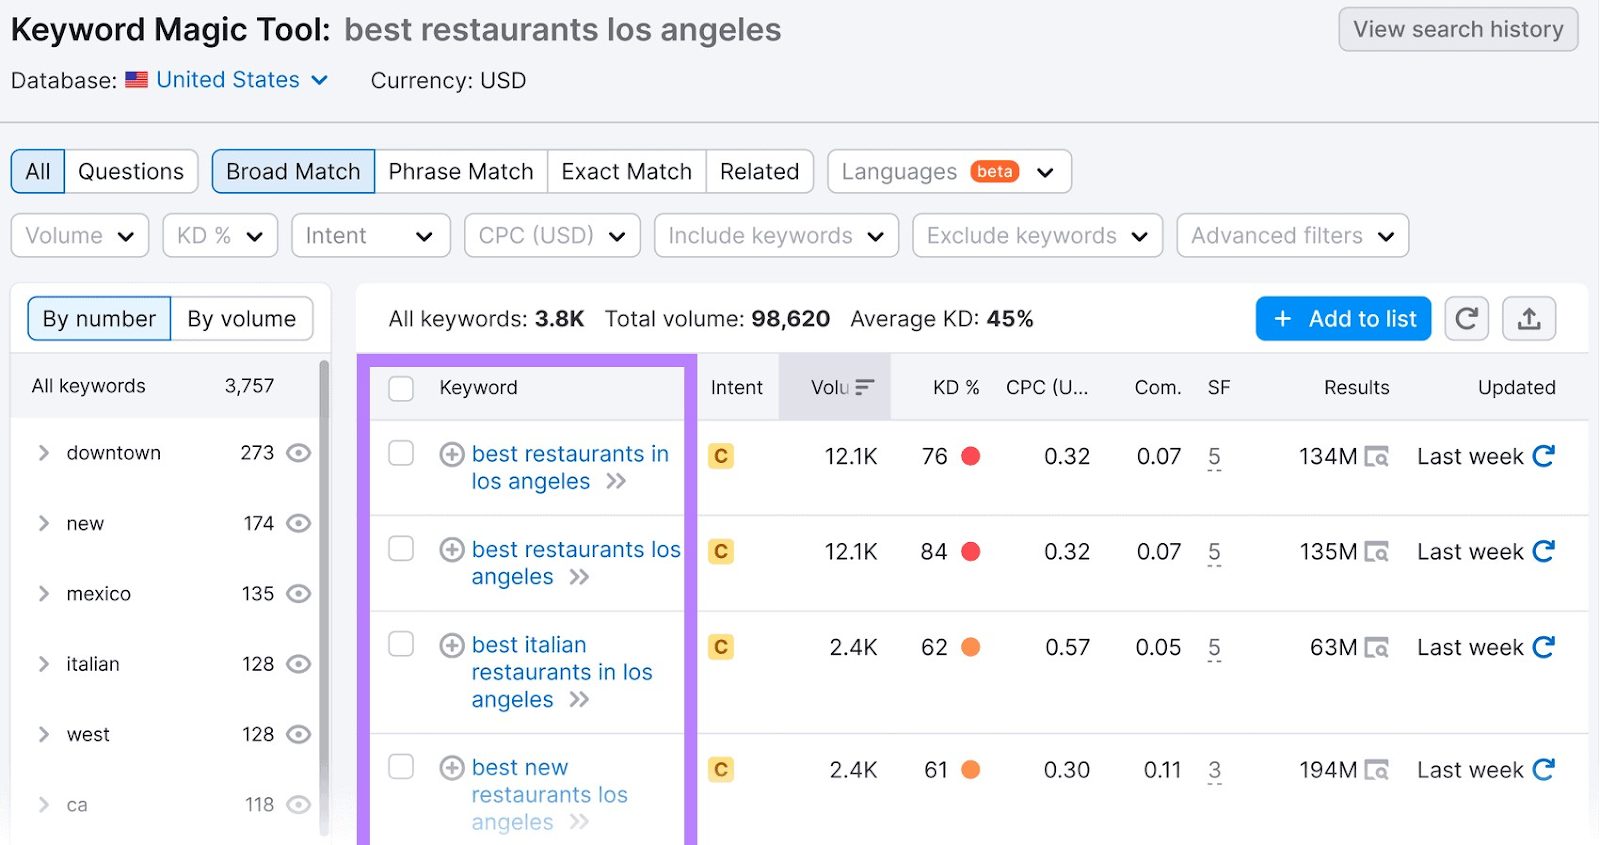 Keyword Magic Tool results for "best restaurants los angeles"